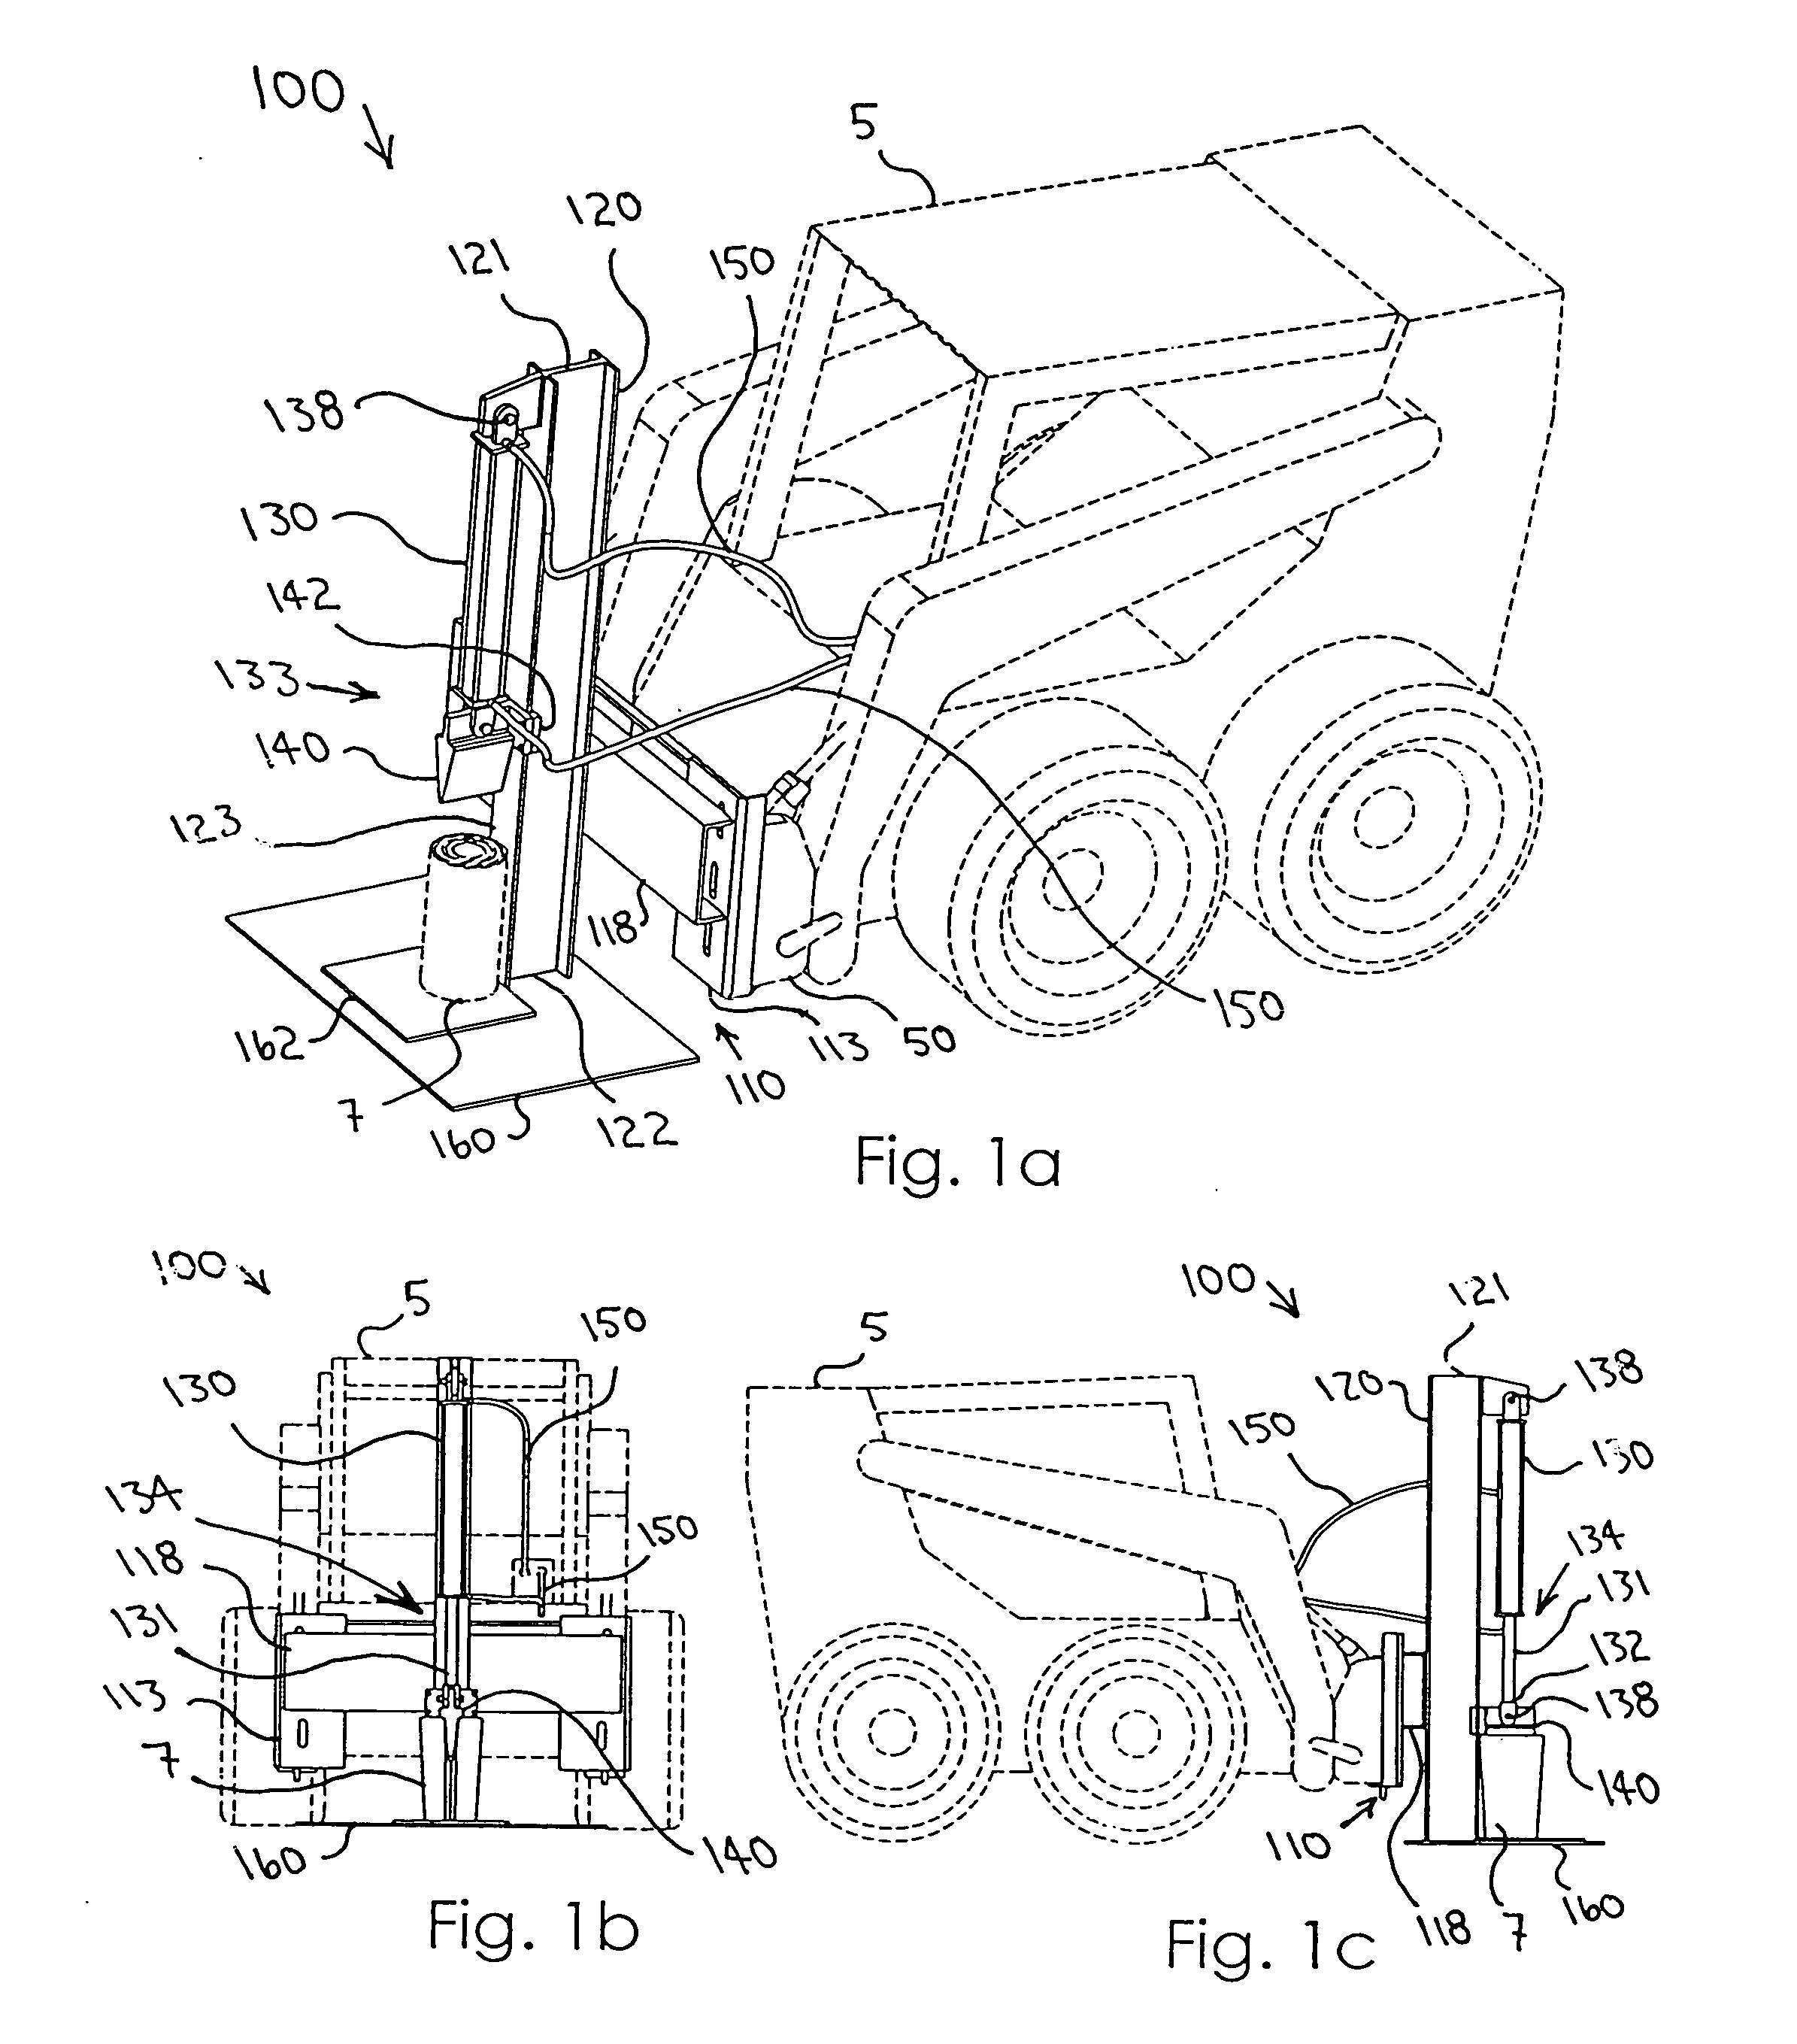 Log splitting apparatus